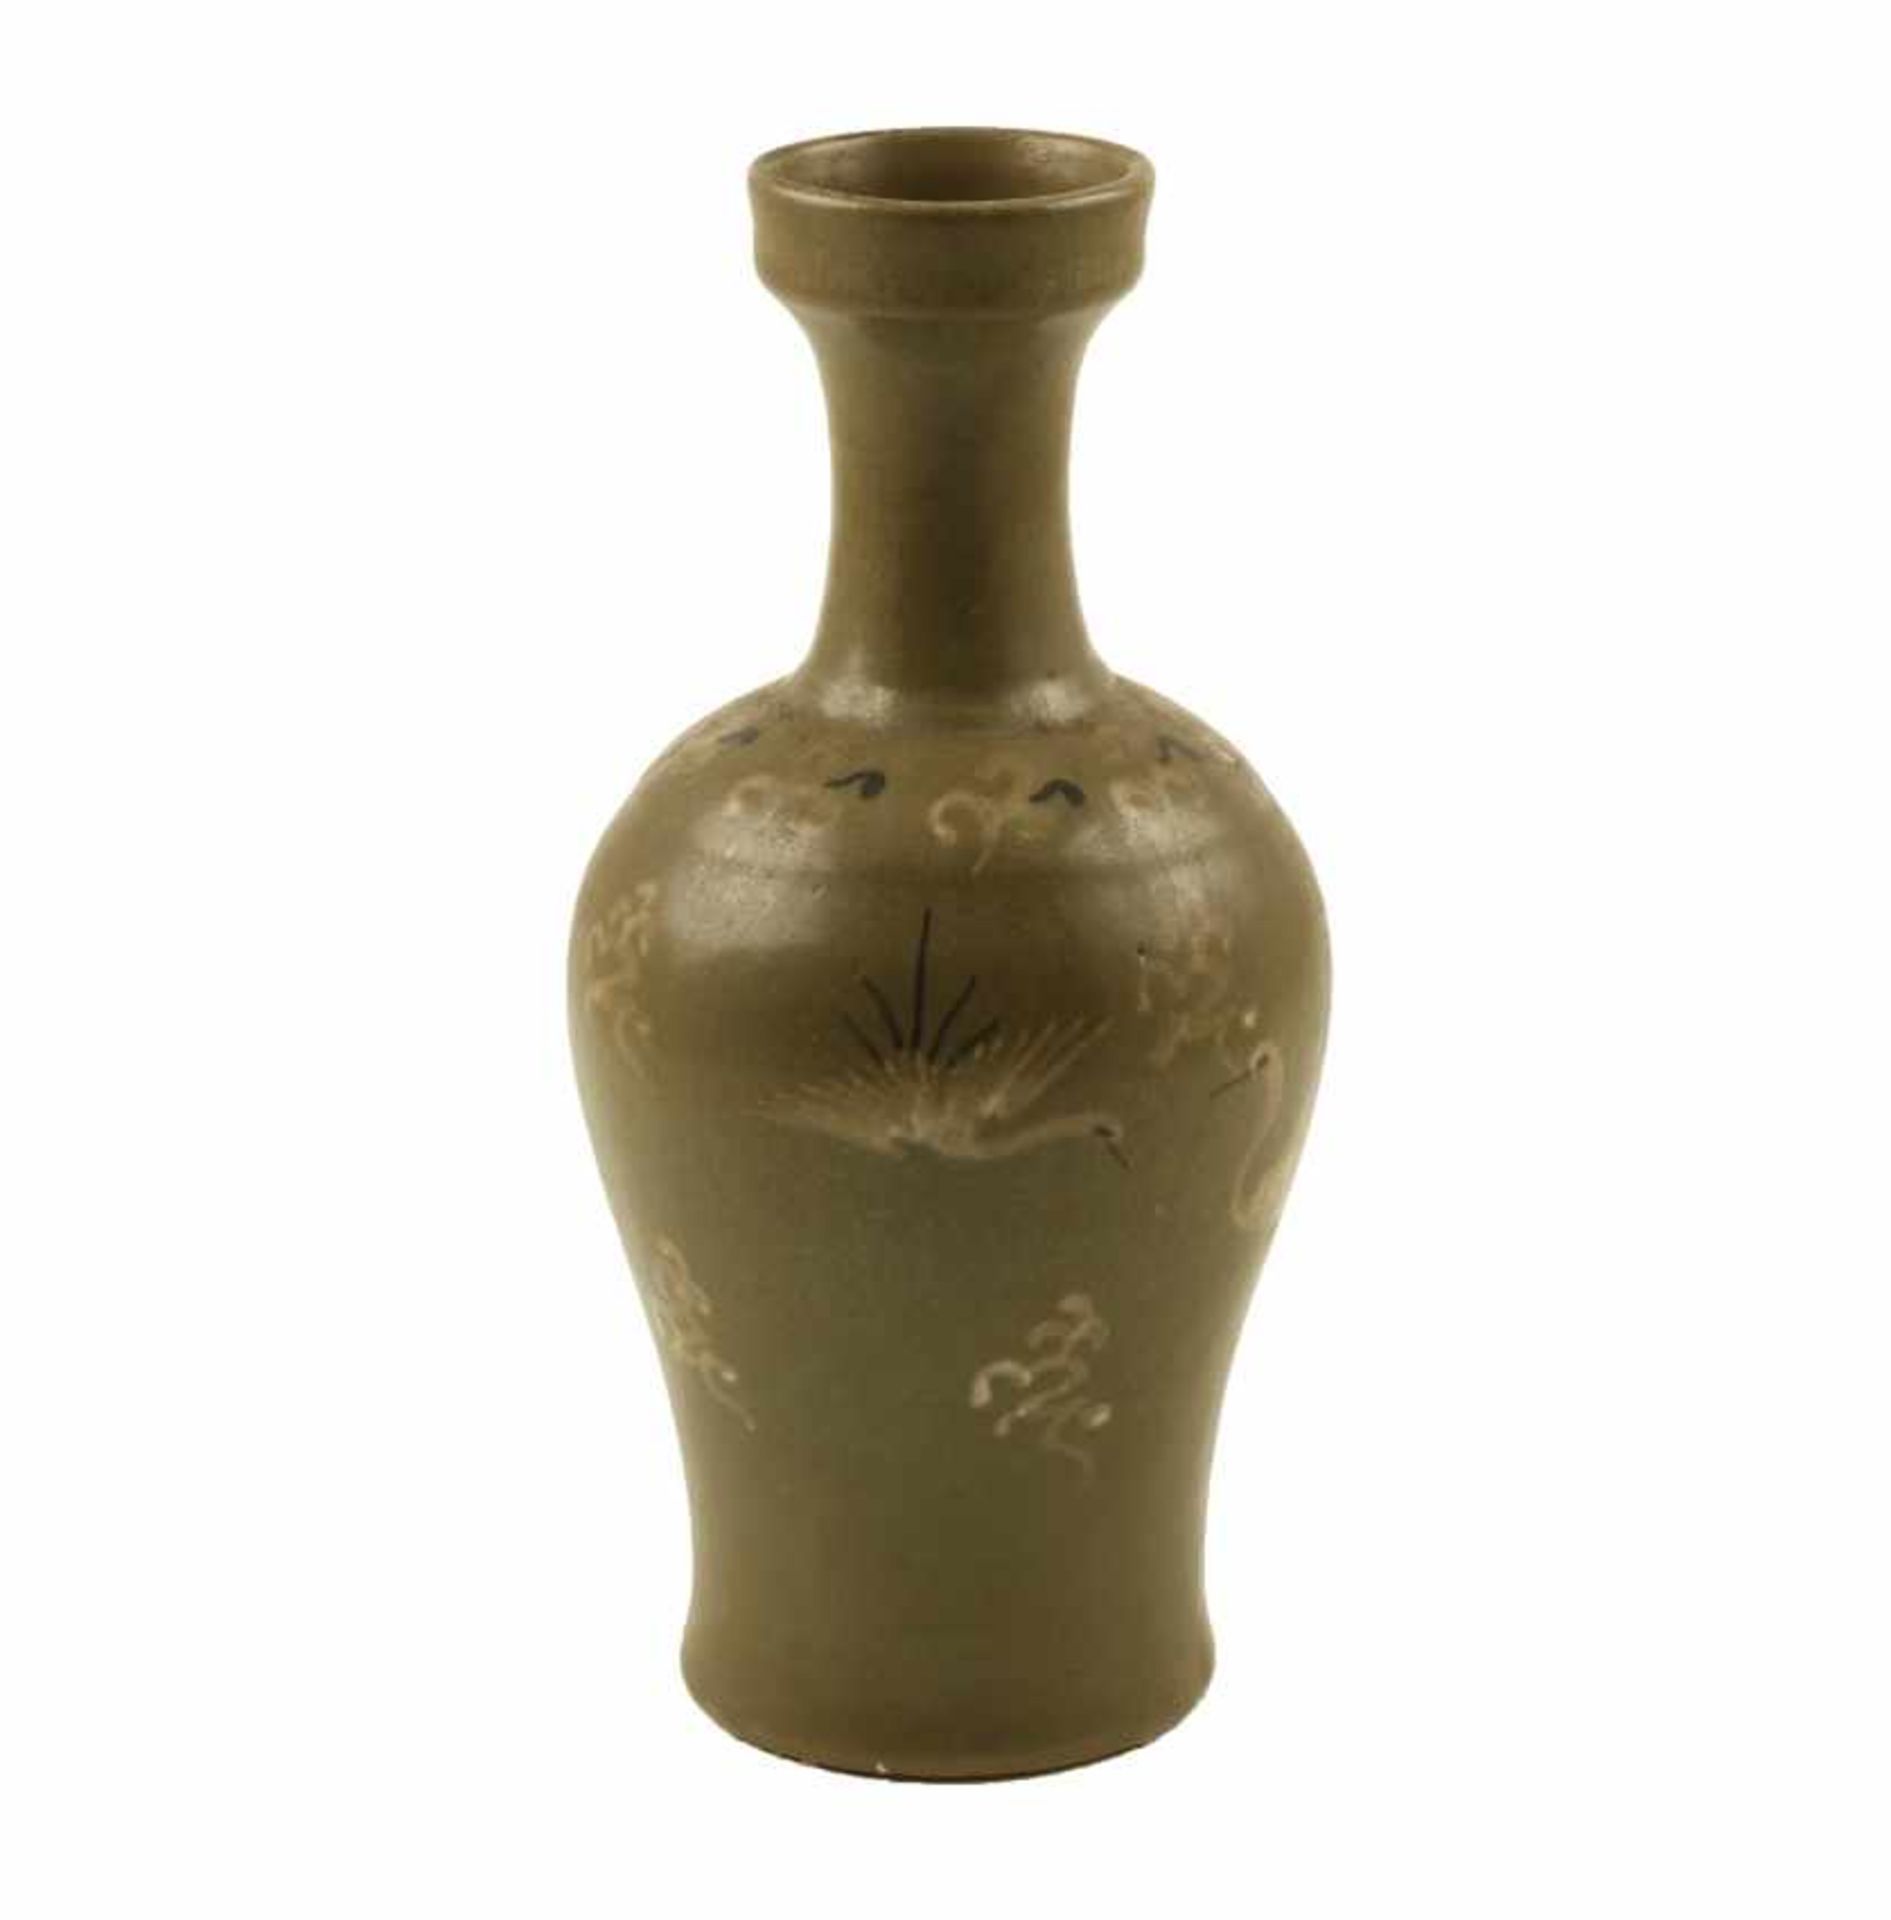 Korean porcelain vase, probably of the 19th CenturyKorean porcelain vase, probably of the 19th